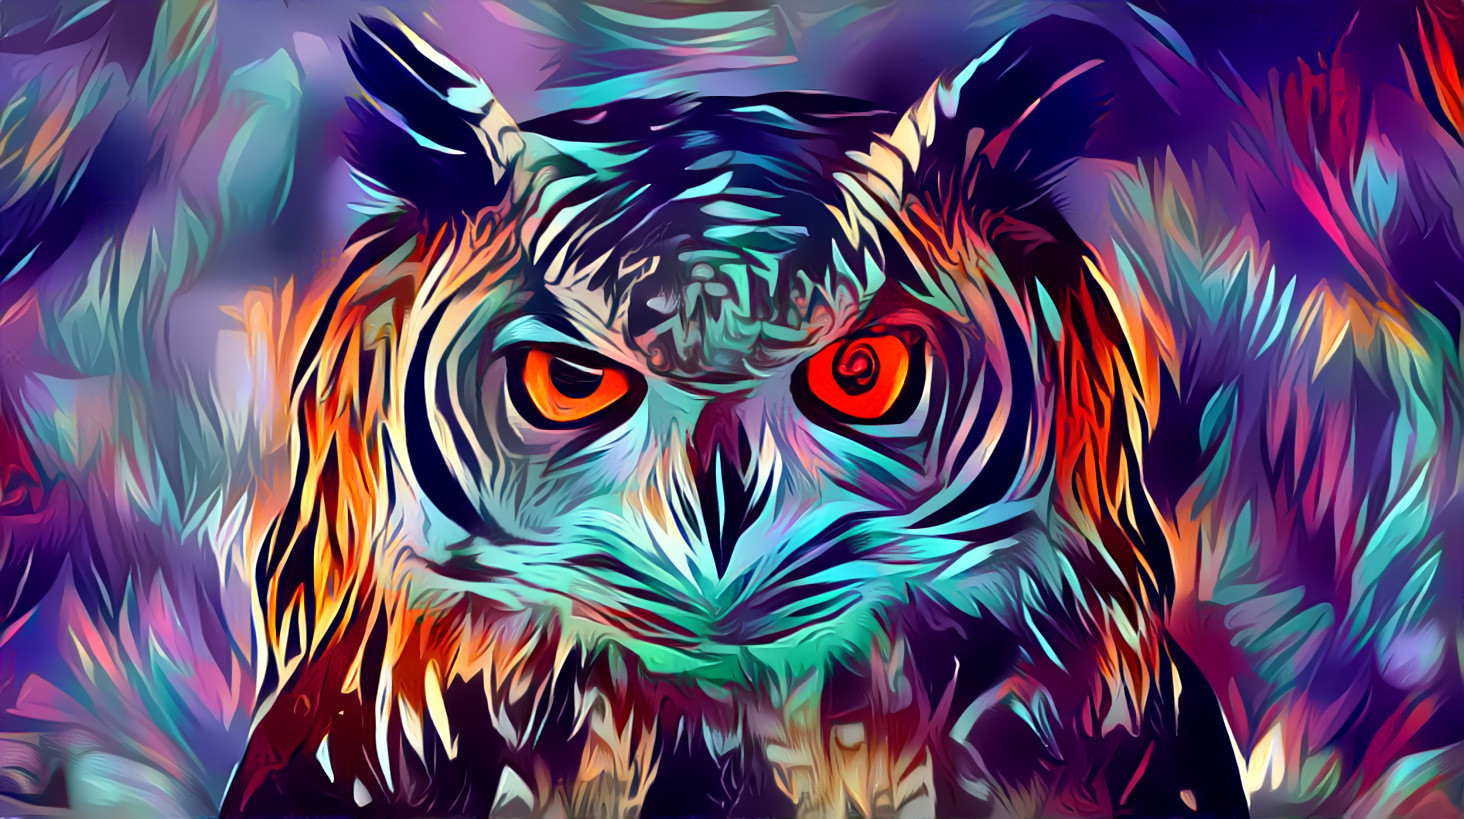 OWL7